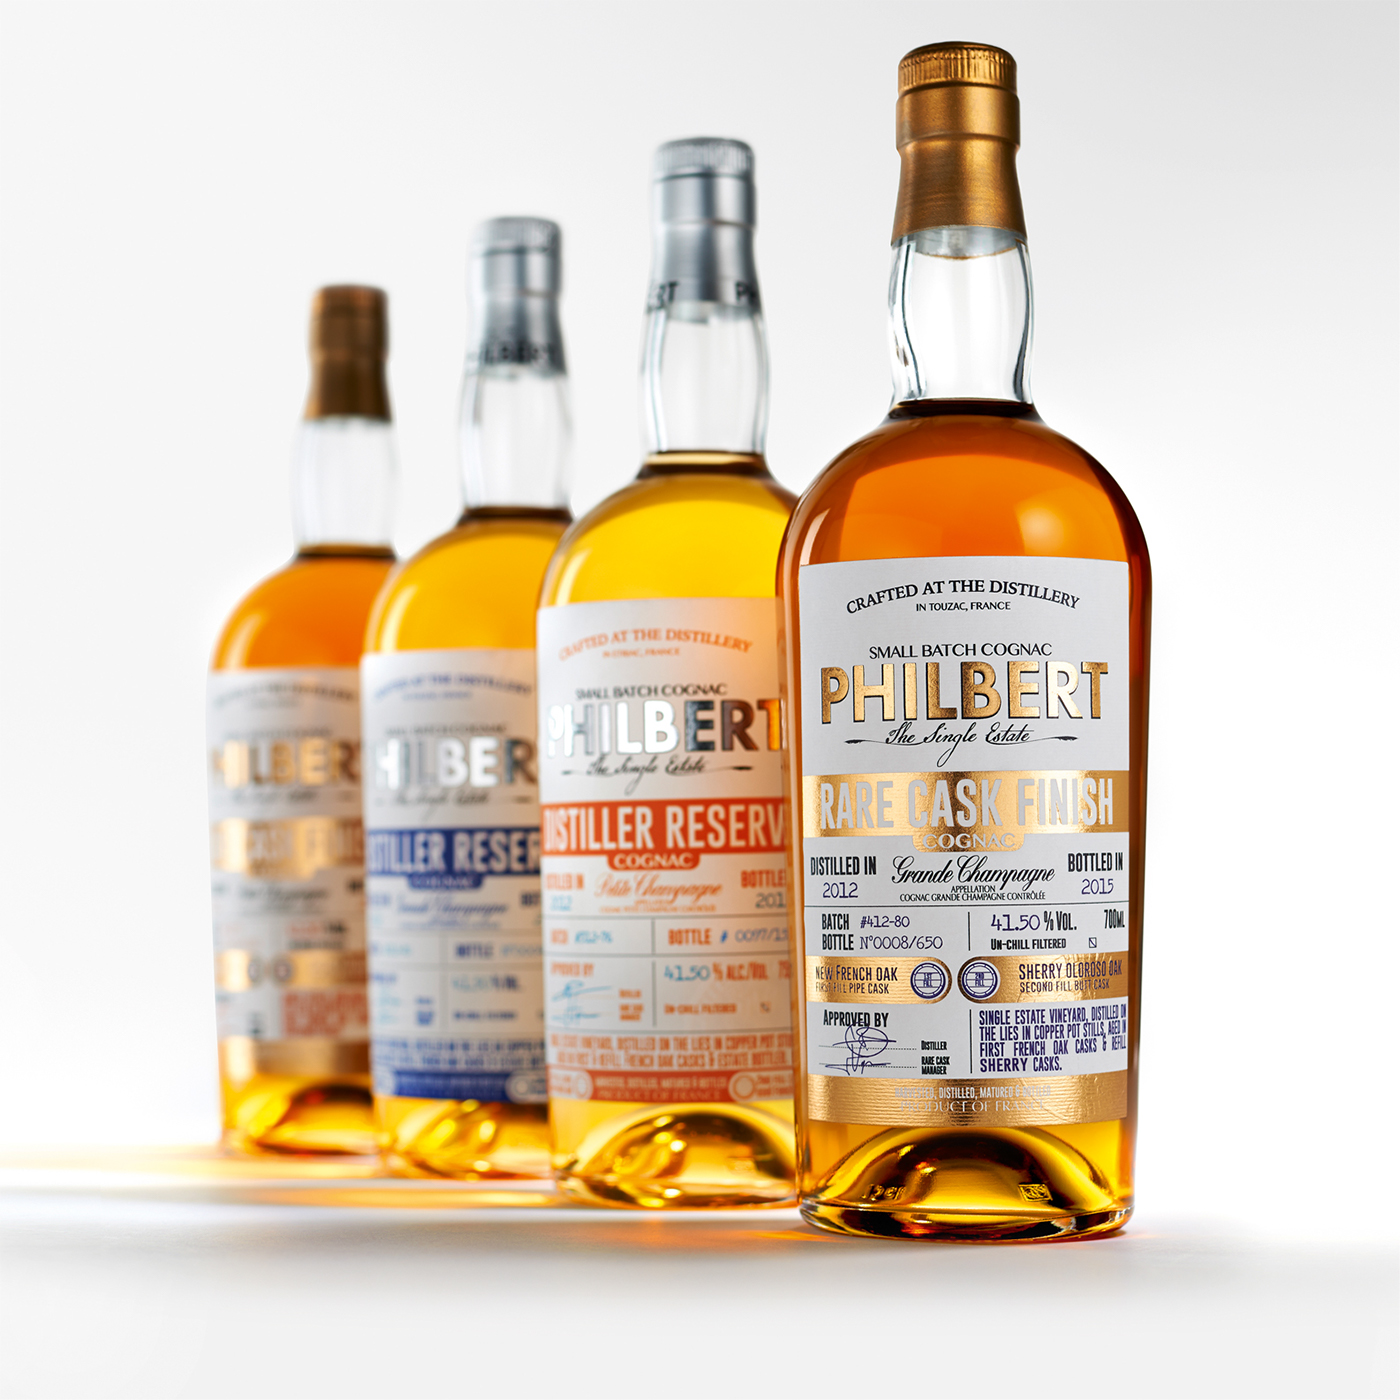 Cognac Philbert branding  Packaging Cask finish Distiller reserve Whisky